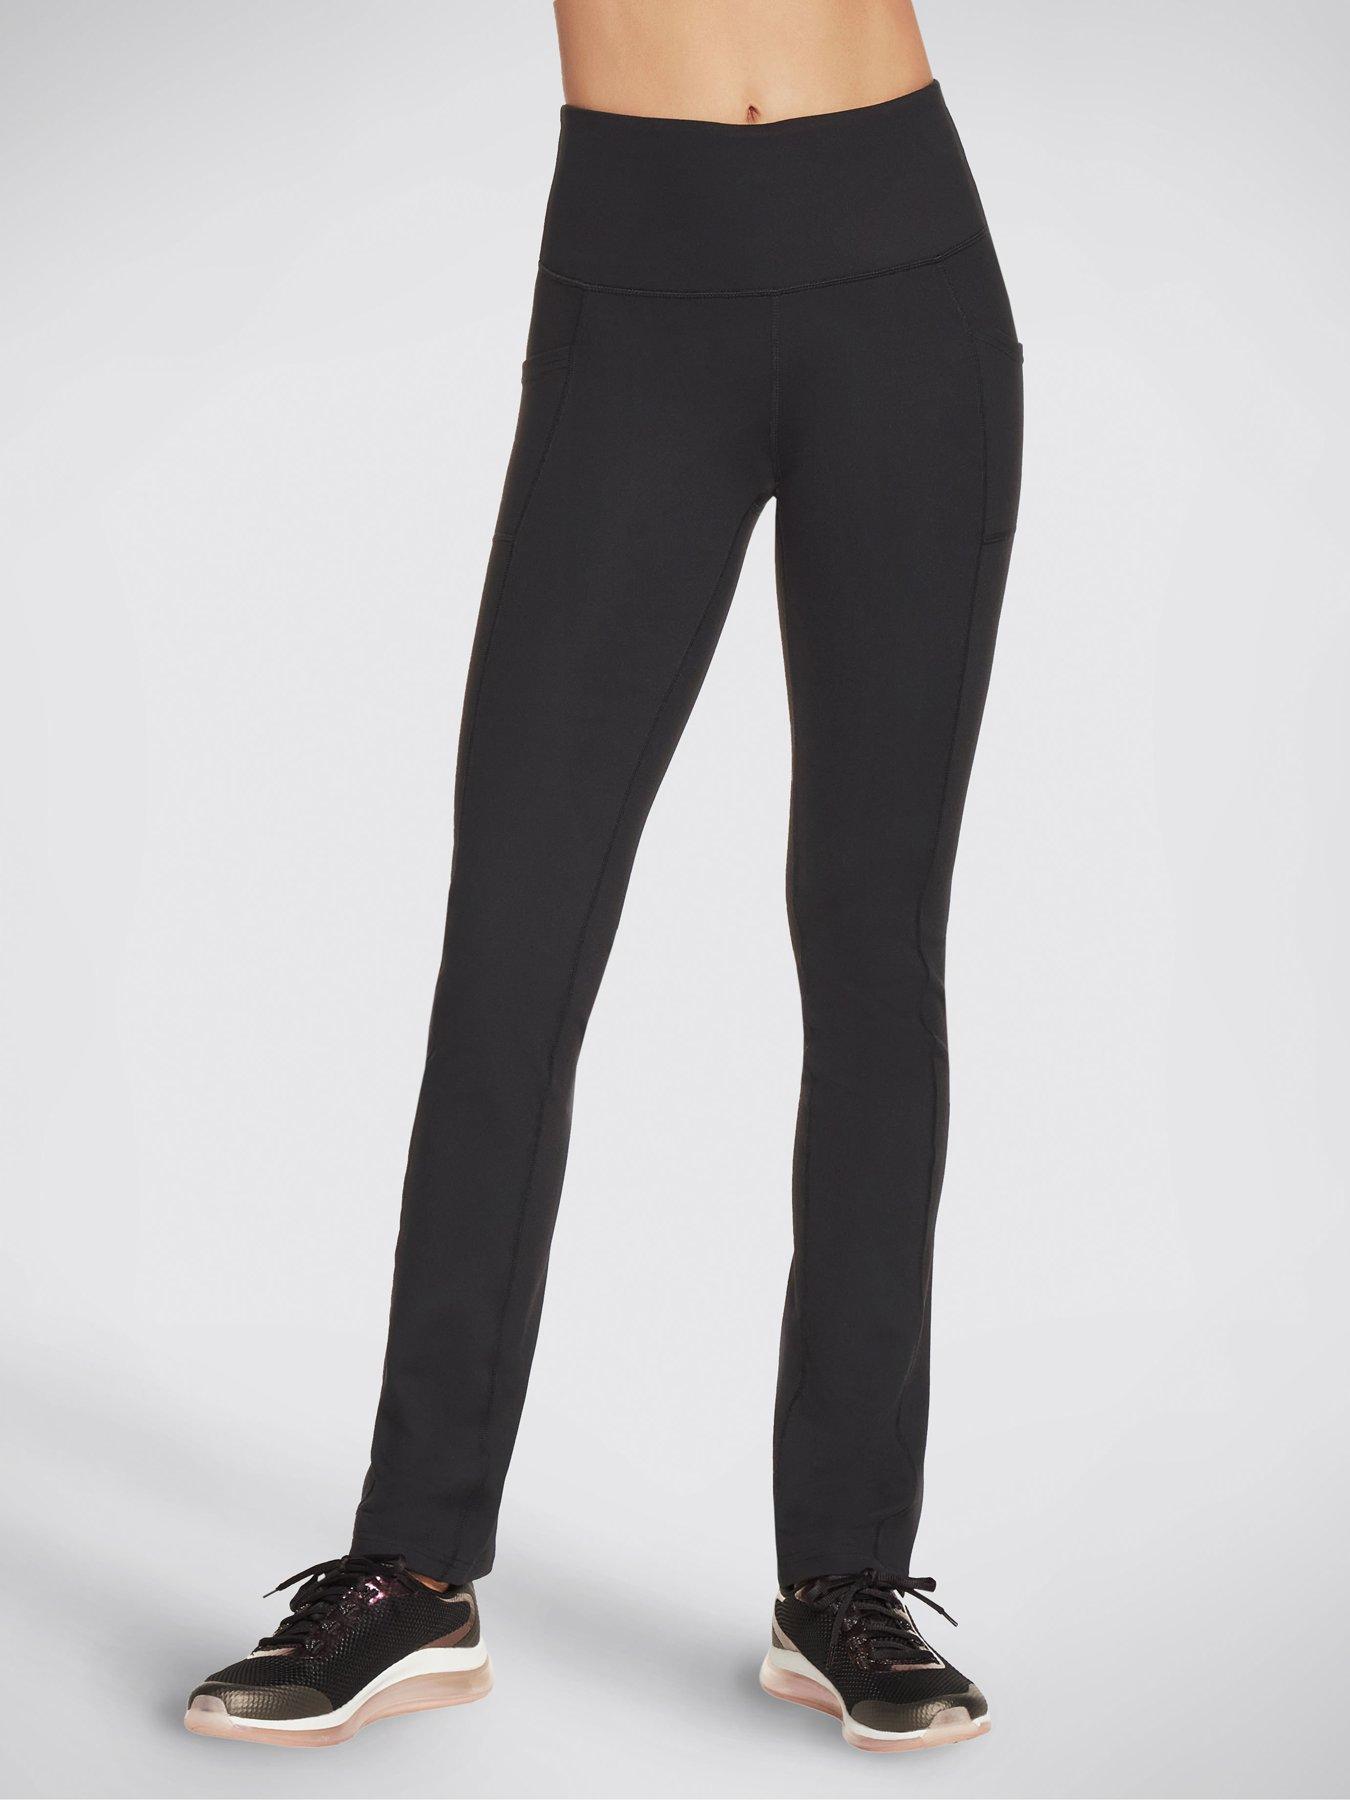 Skechers Ladies Gowalk High Waist Legging 4-Way Stretch (X-Small, Black) at   Women's Clothing store